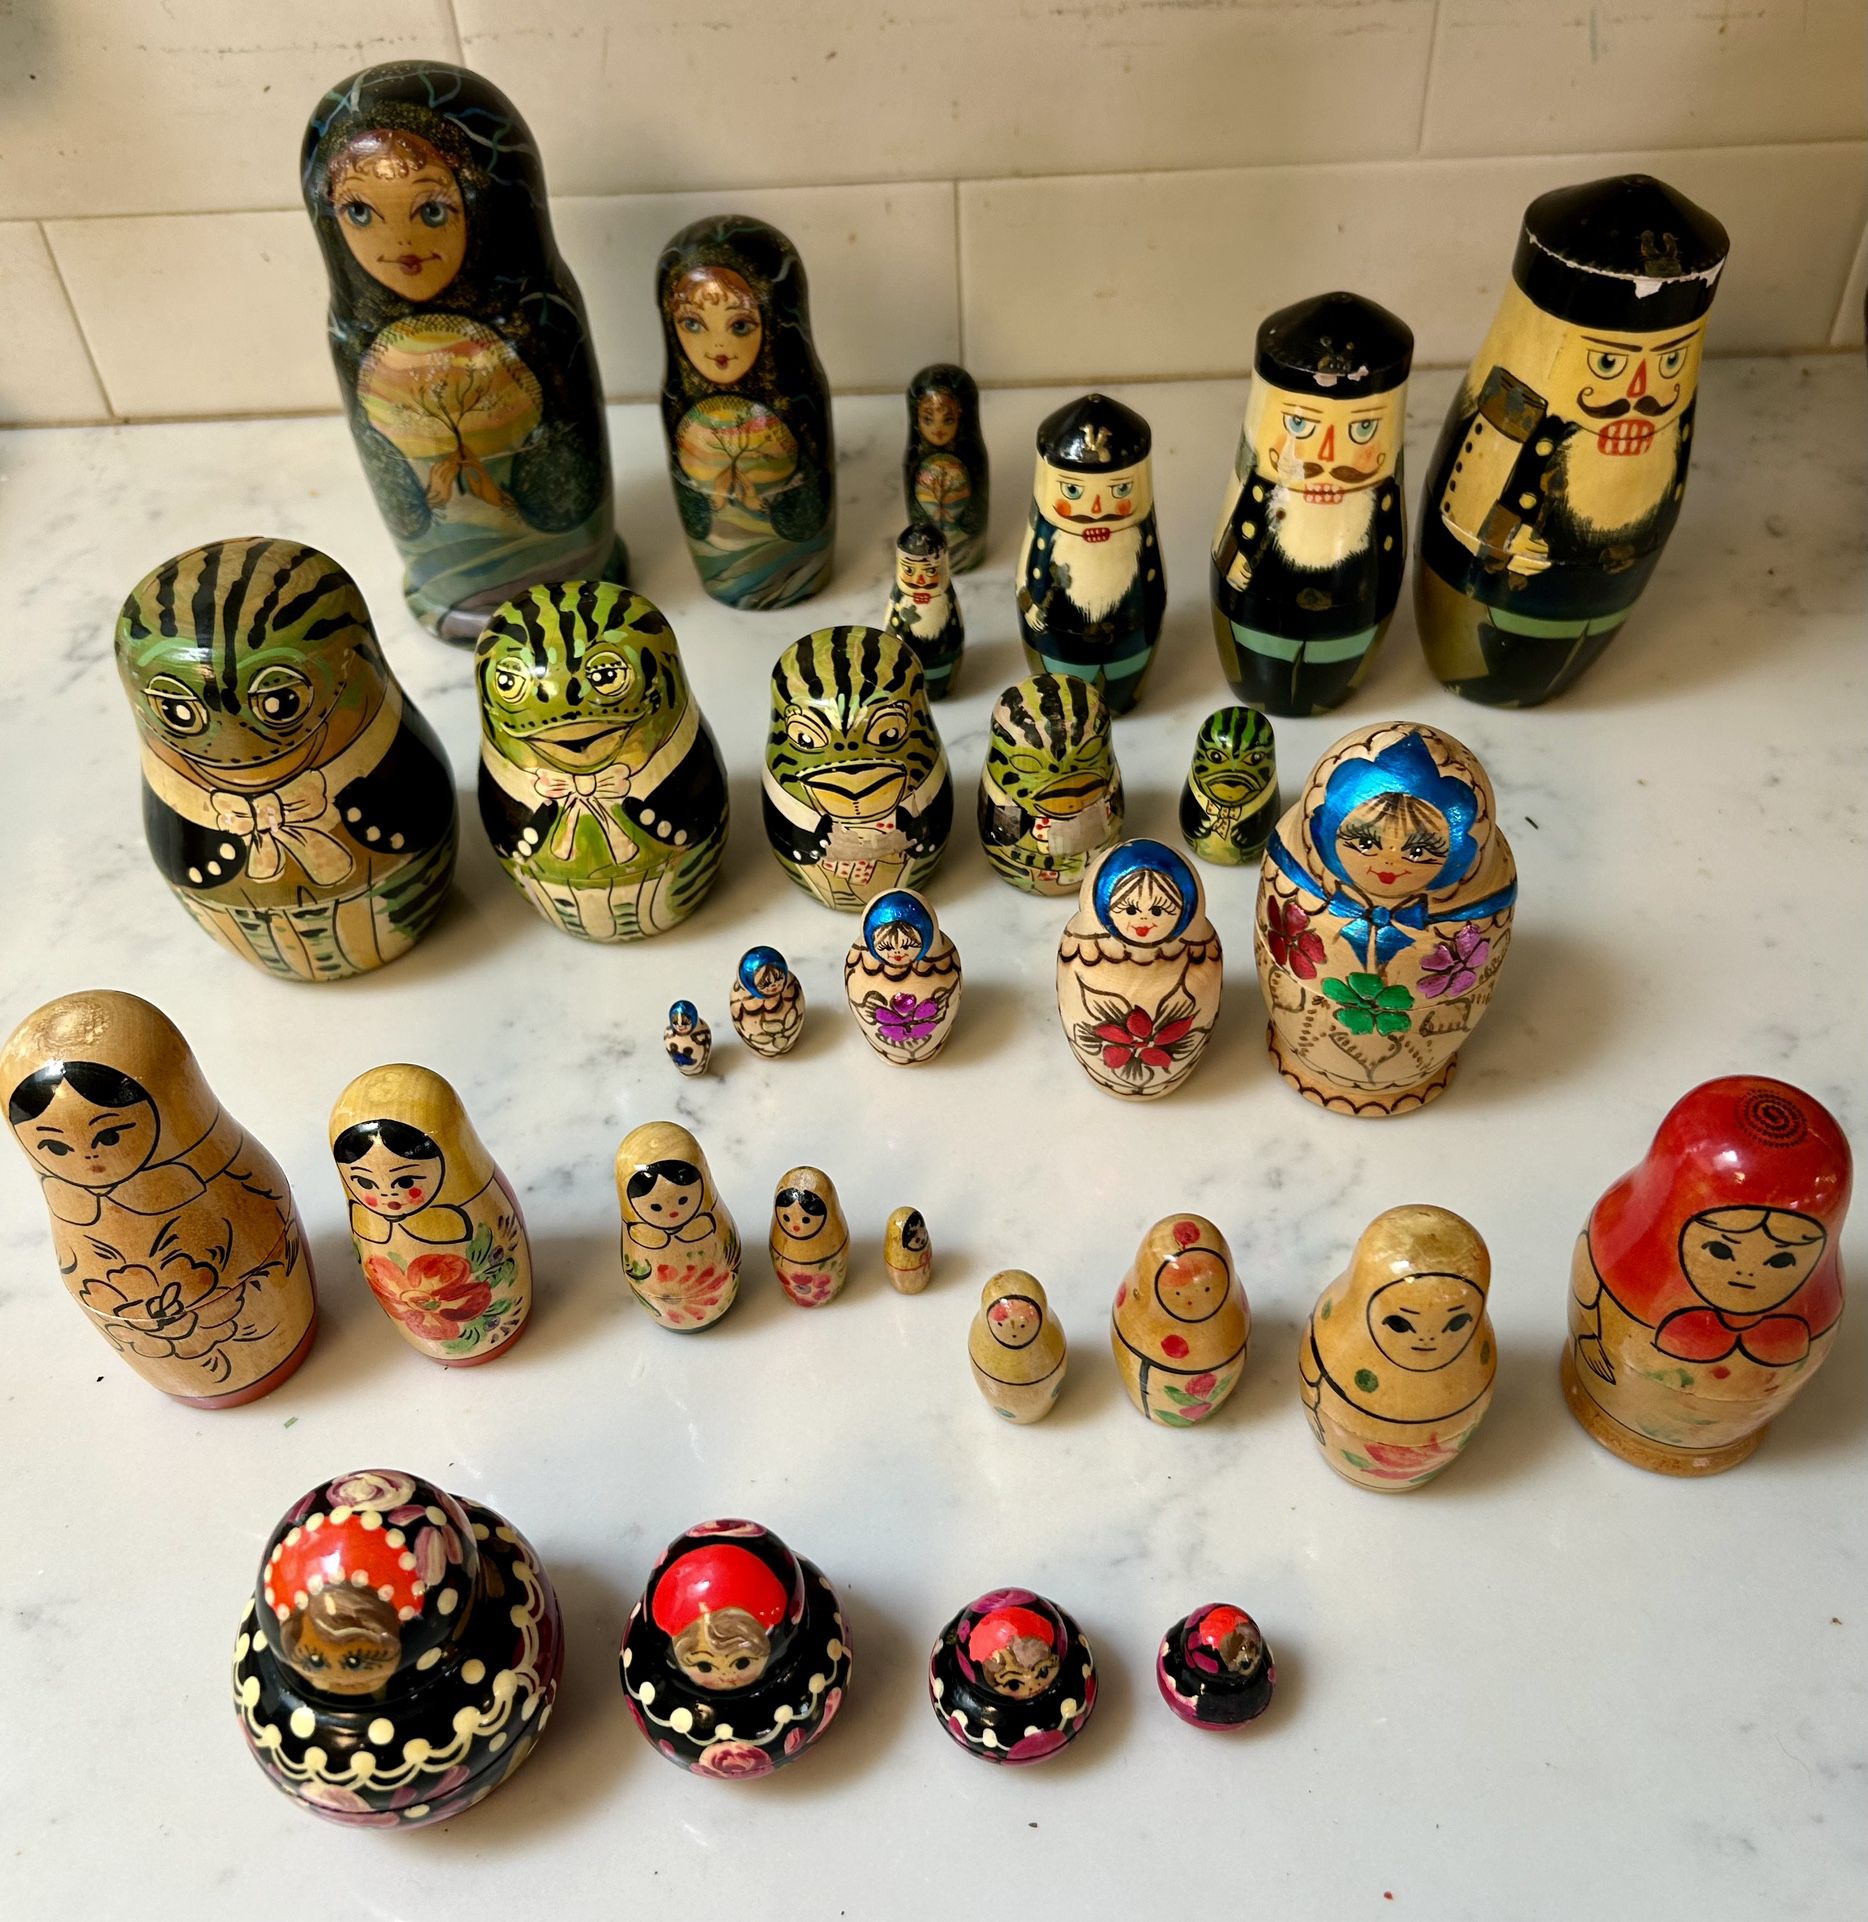 6 Sets Russian Nesting Dolls